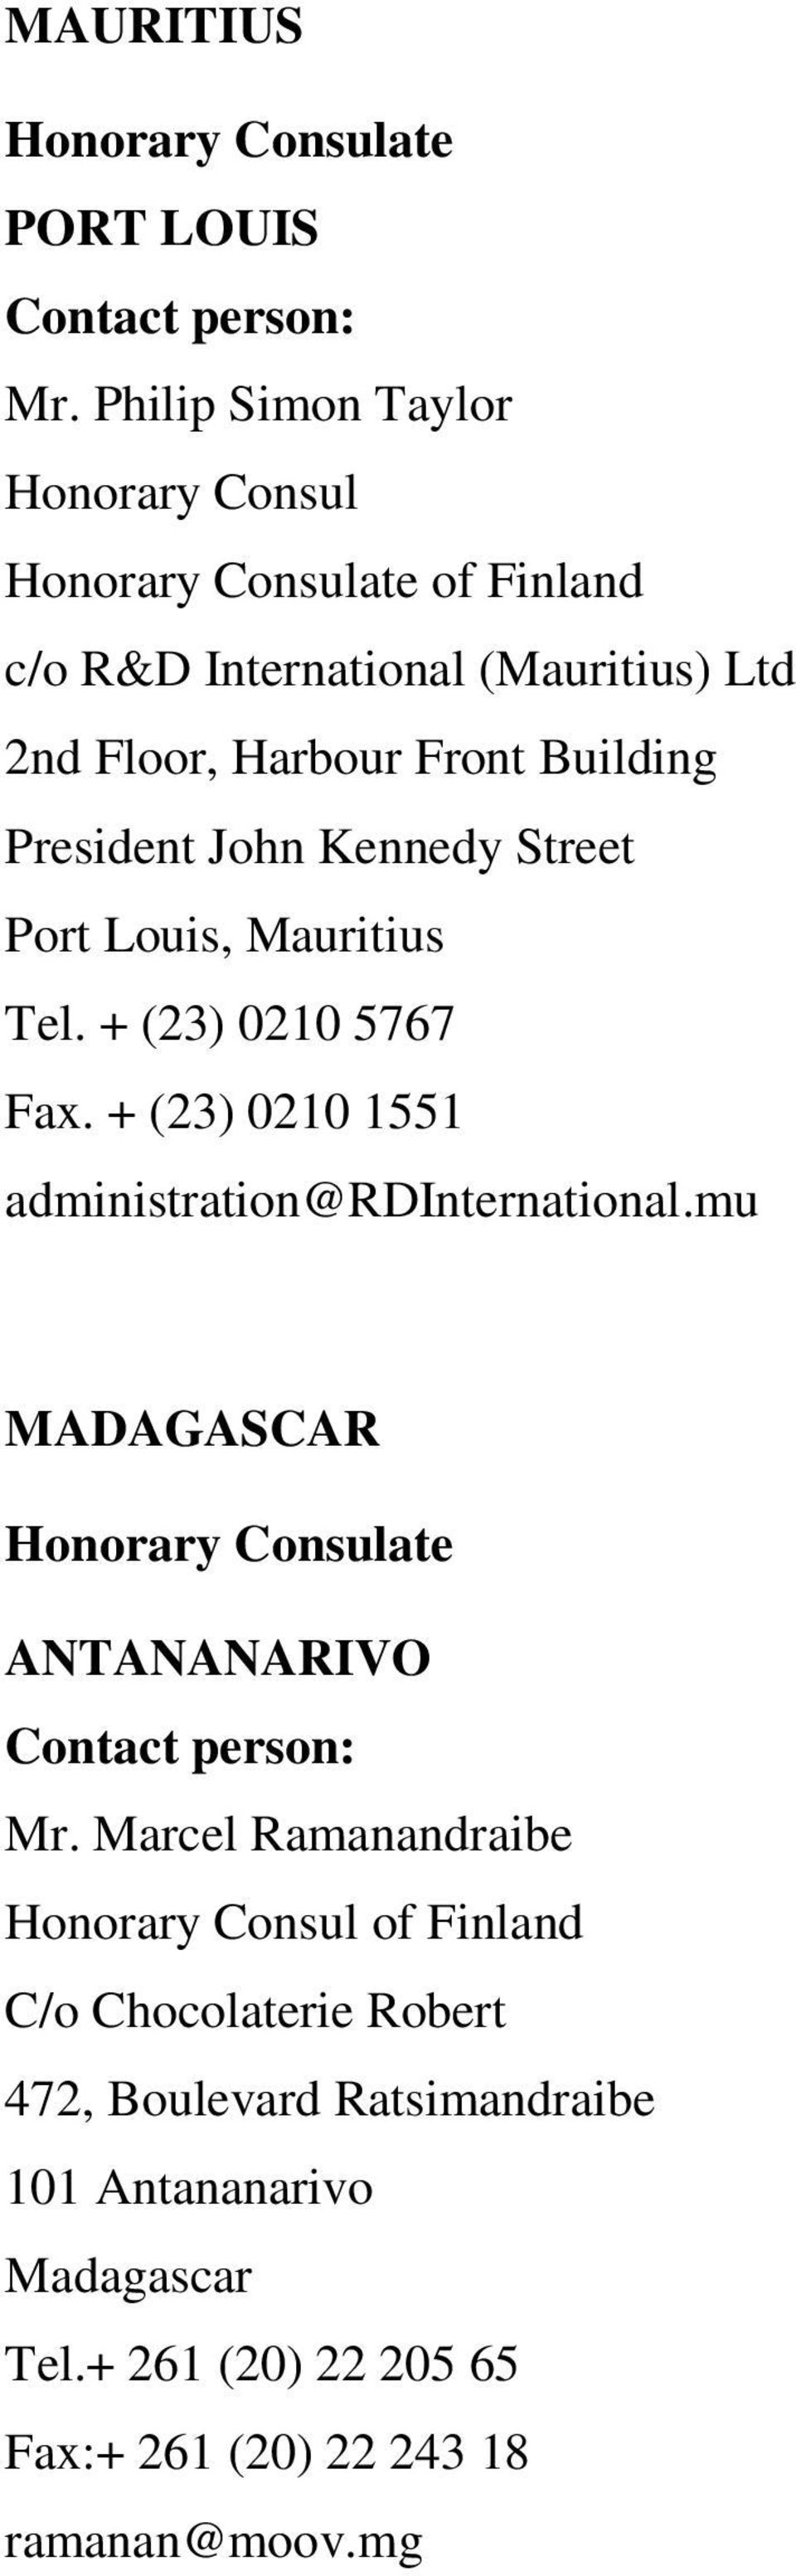 President John Kennedy Street Port Louis, Mauritius Tel. + (23) 0210 5767 Fax. + (23) 0210 1551 administration@rdinternational.